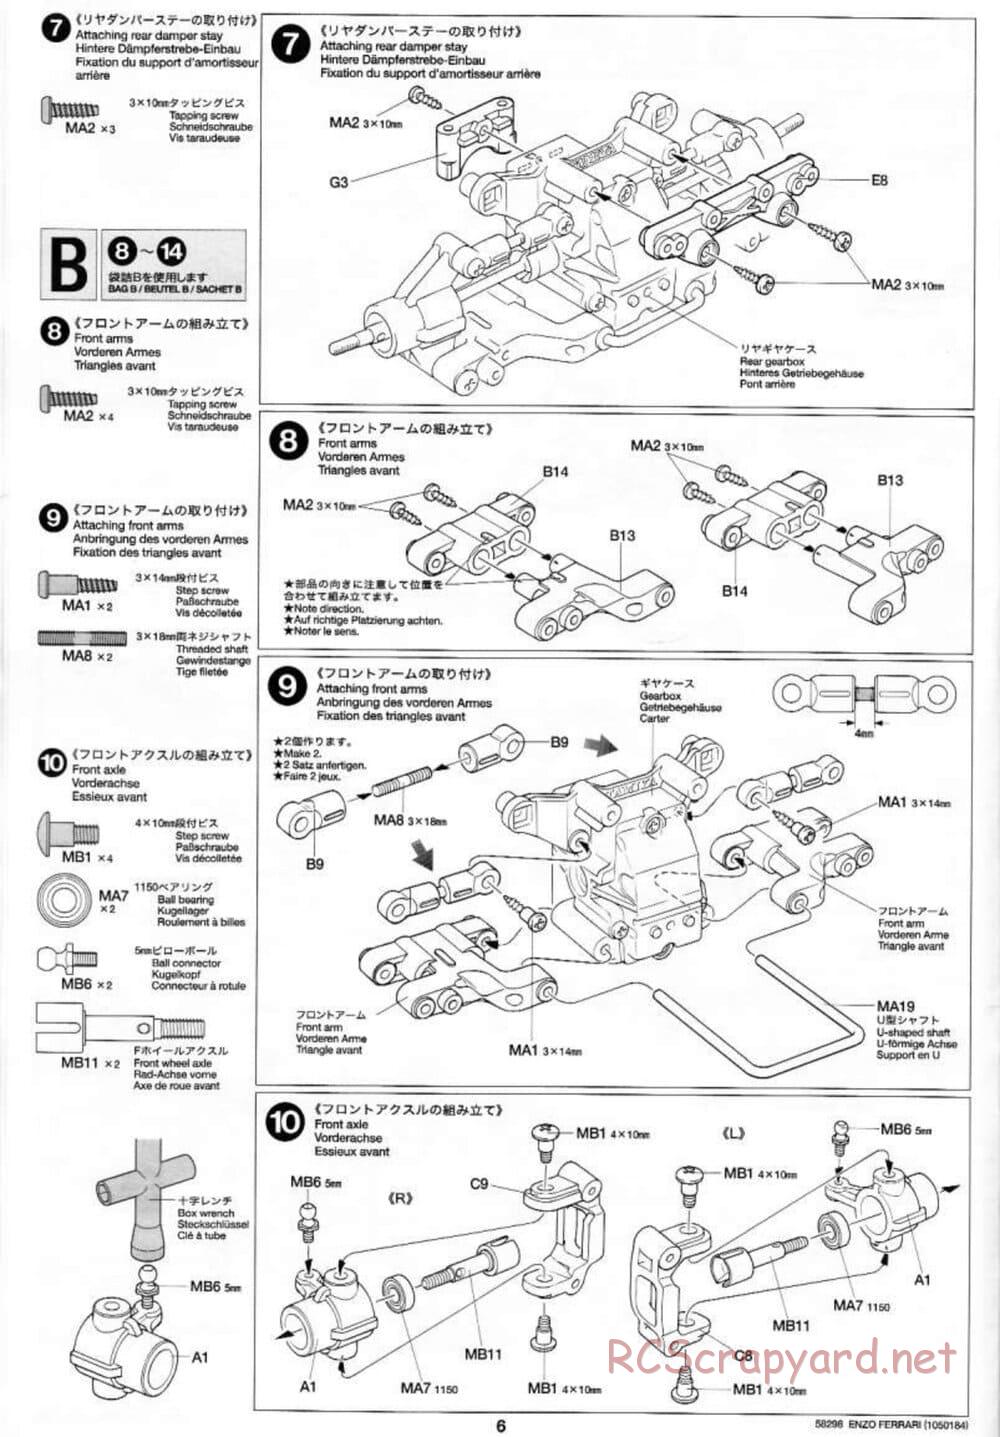 Tamiya - Enzo Ferrari - TB-01 Chassis - Manual - Page 6